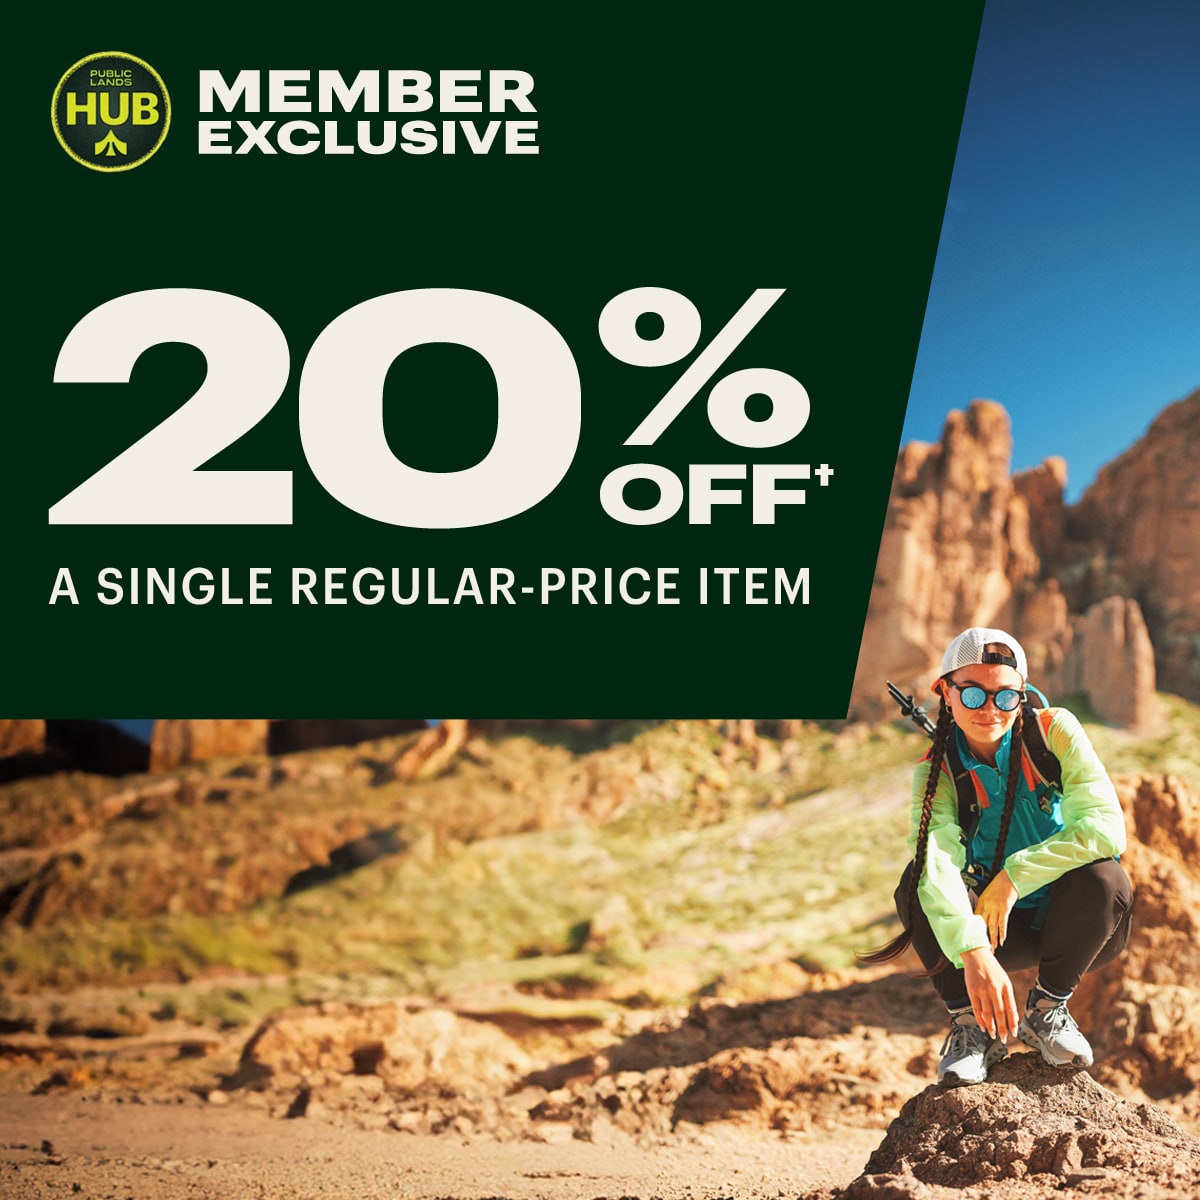 HUB member exclusive. 20% off a single regular-price item.